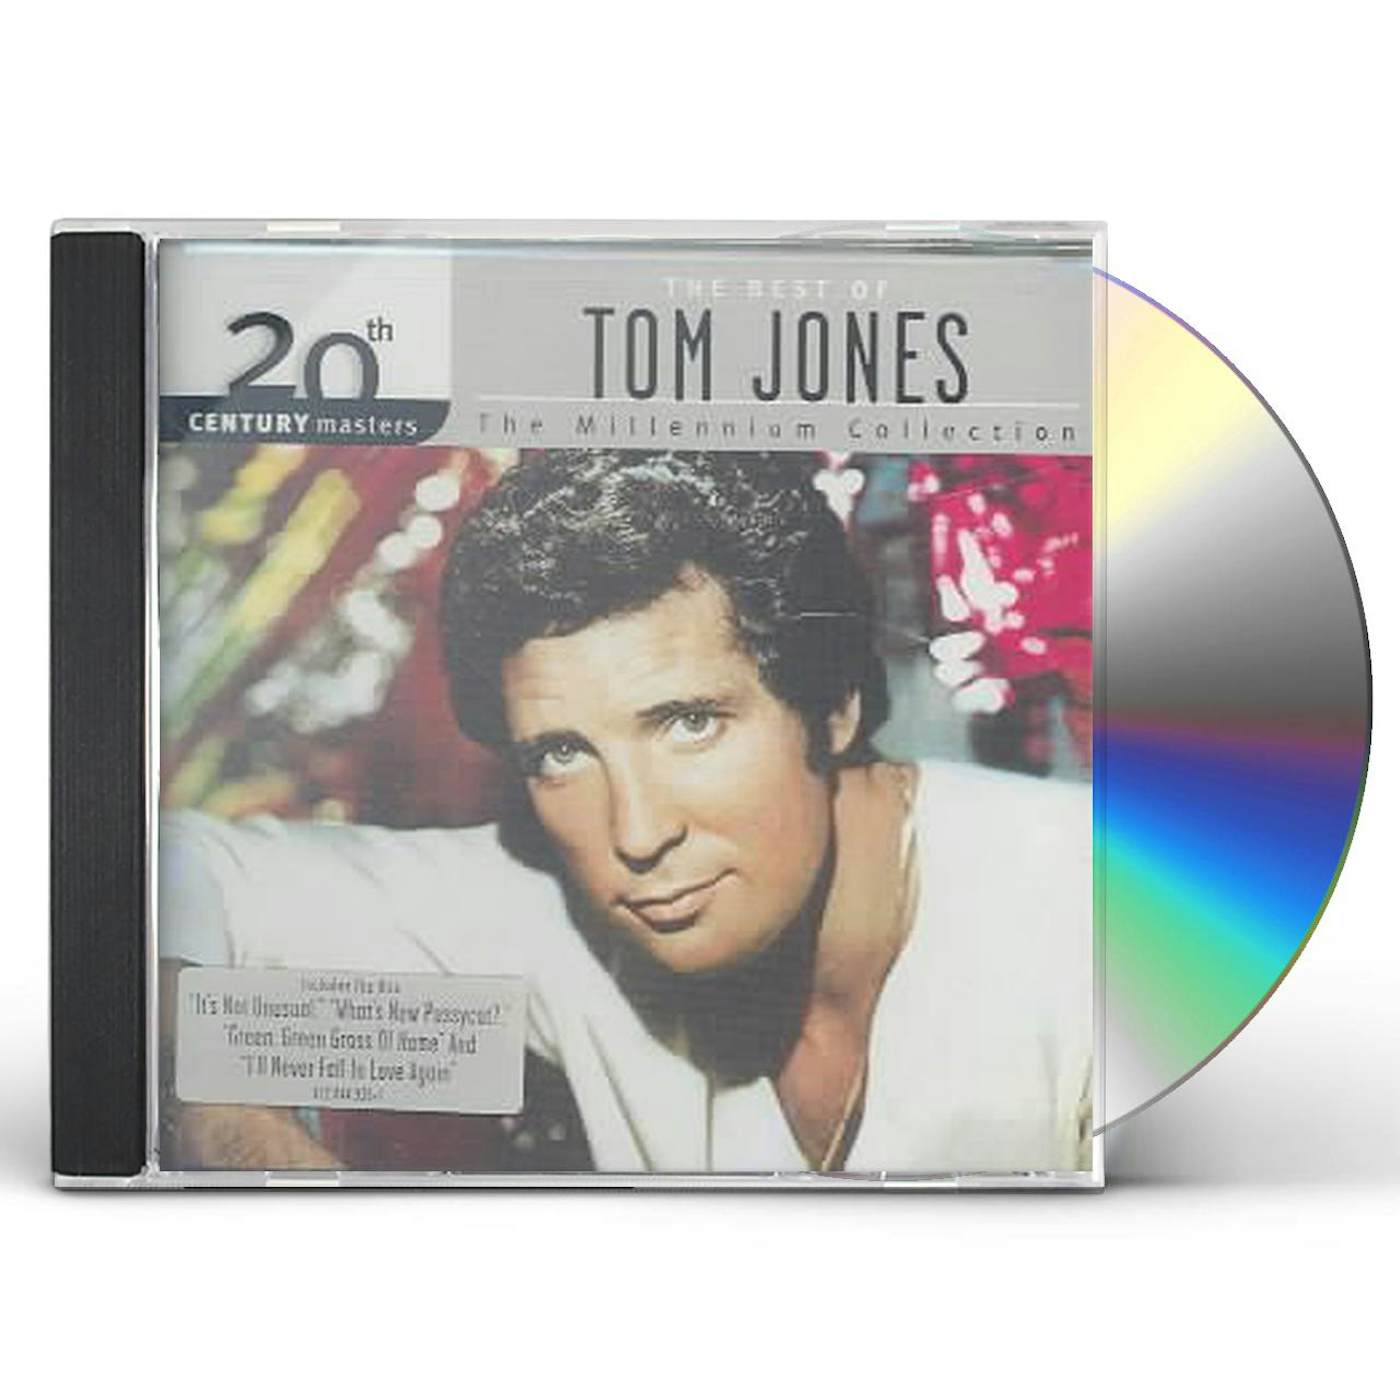 Tom Jones 20TH CENTURY MASTERS CD